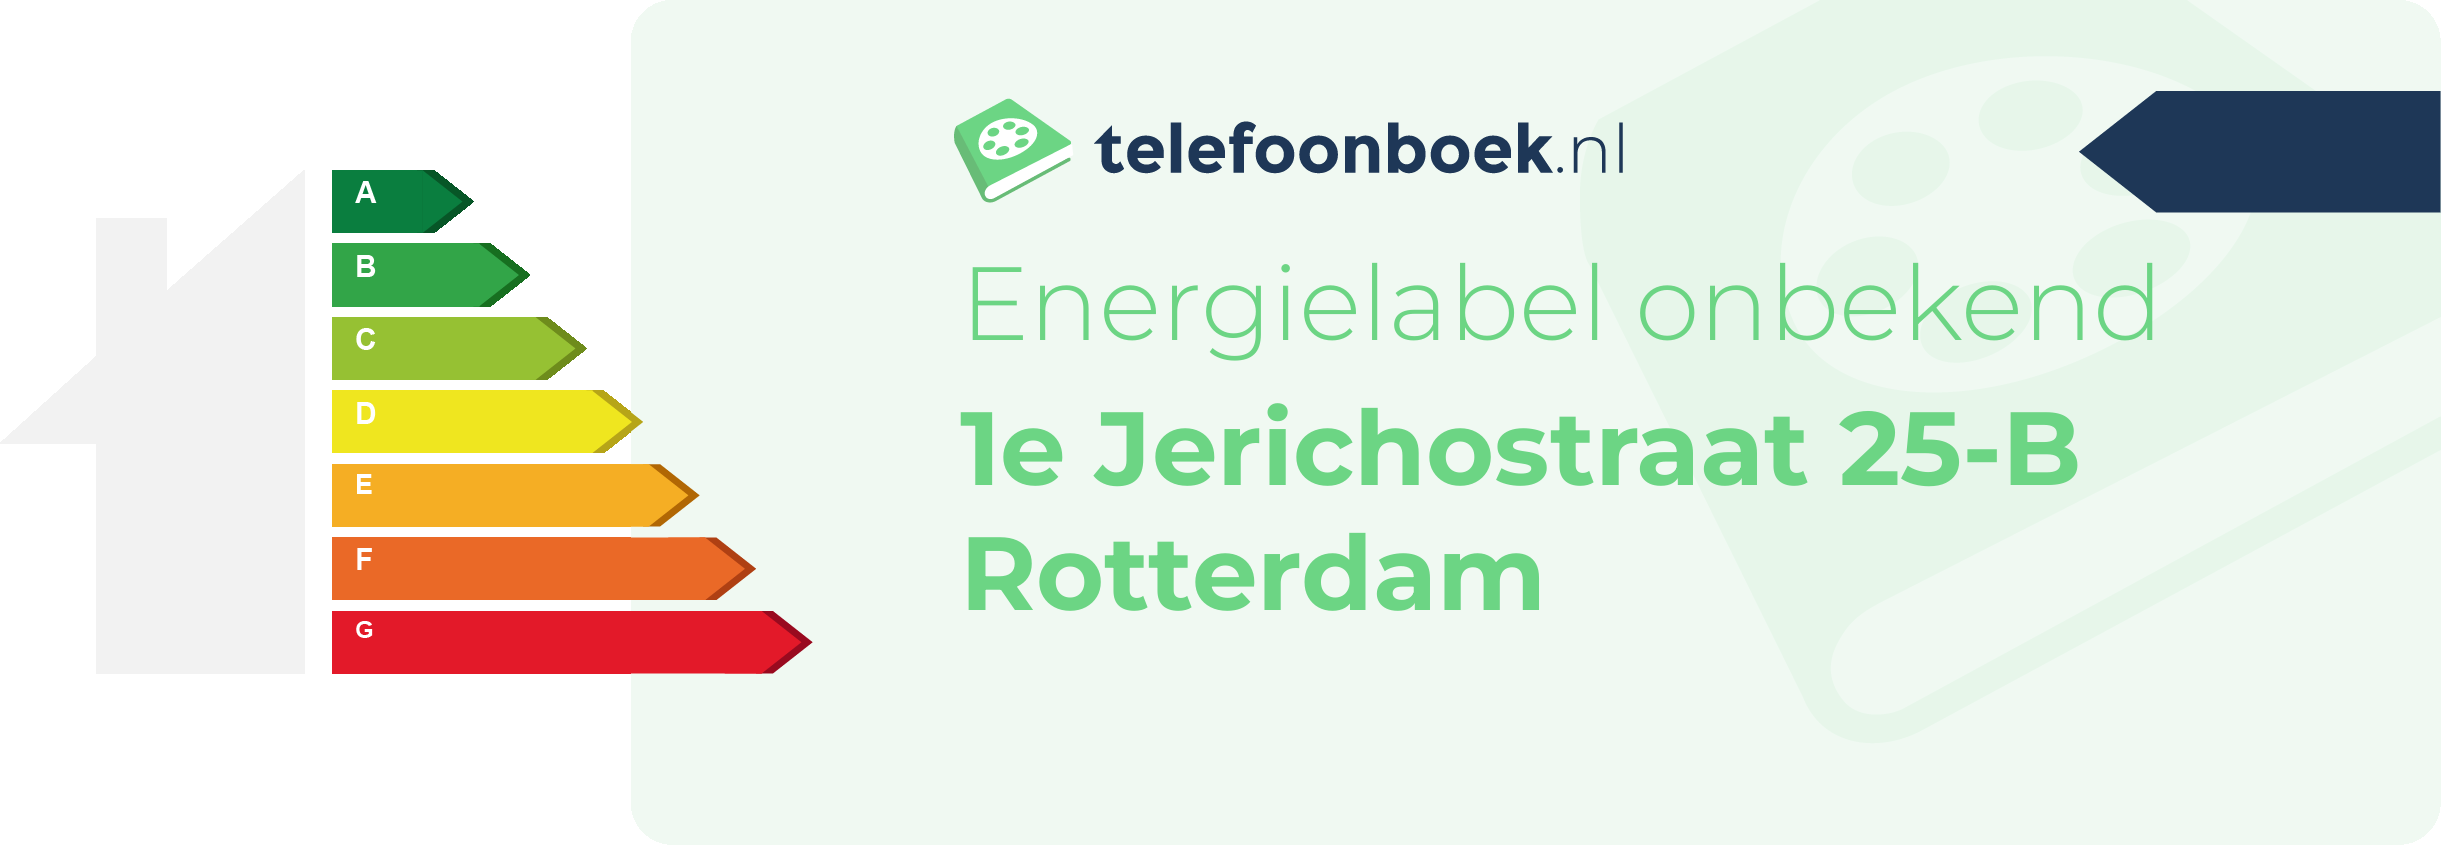 Energielabel 1e Jerichostraat 25-B Rotterdam